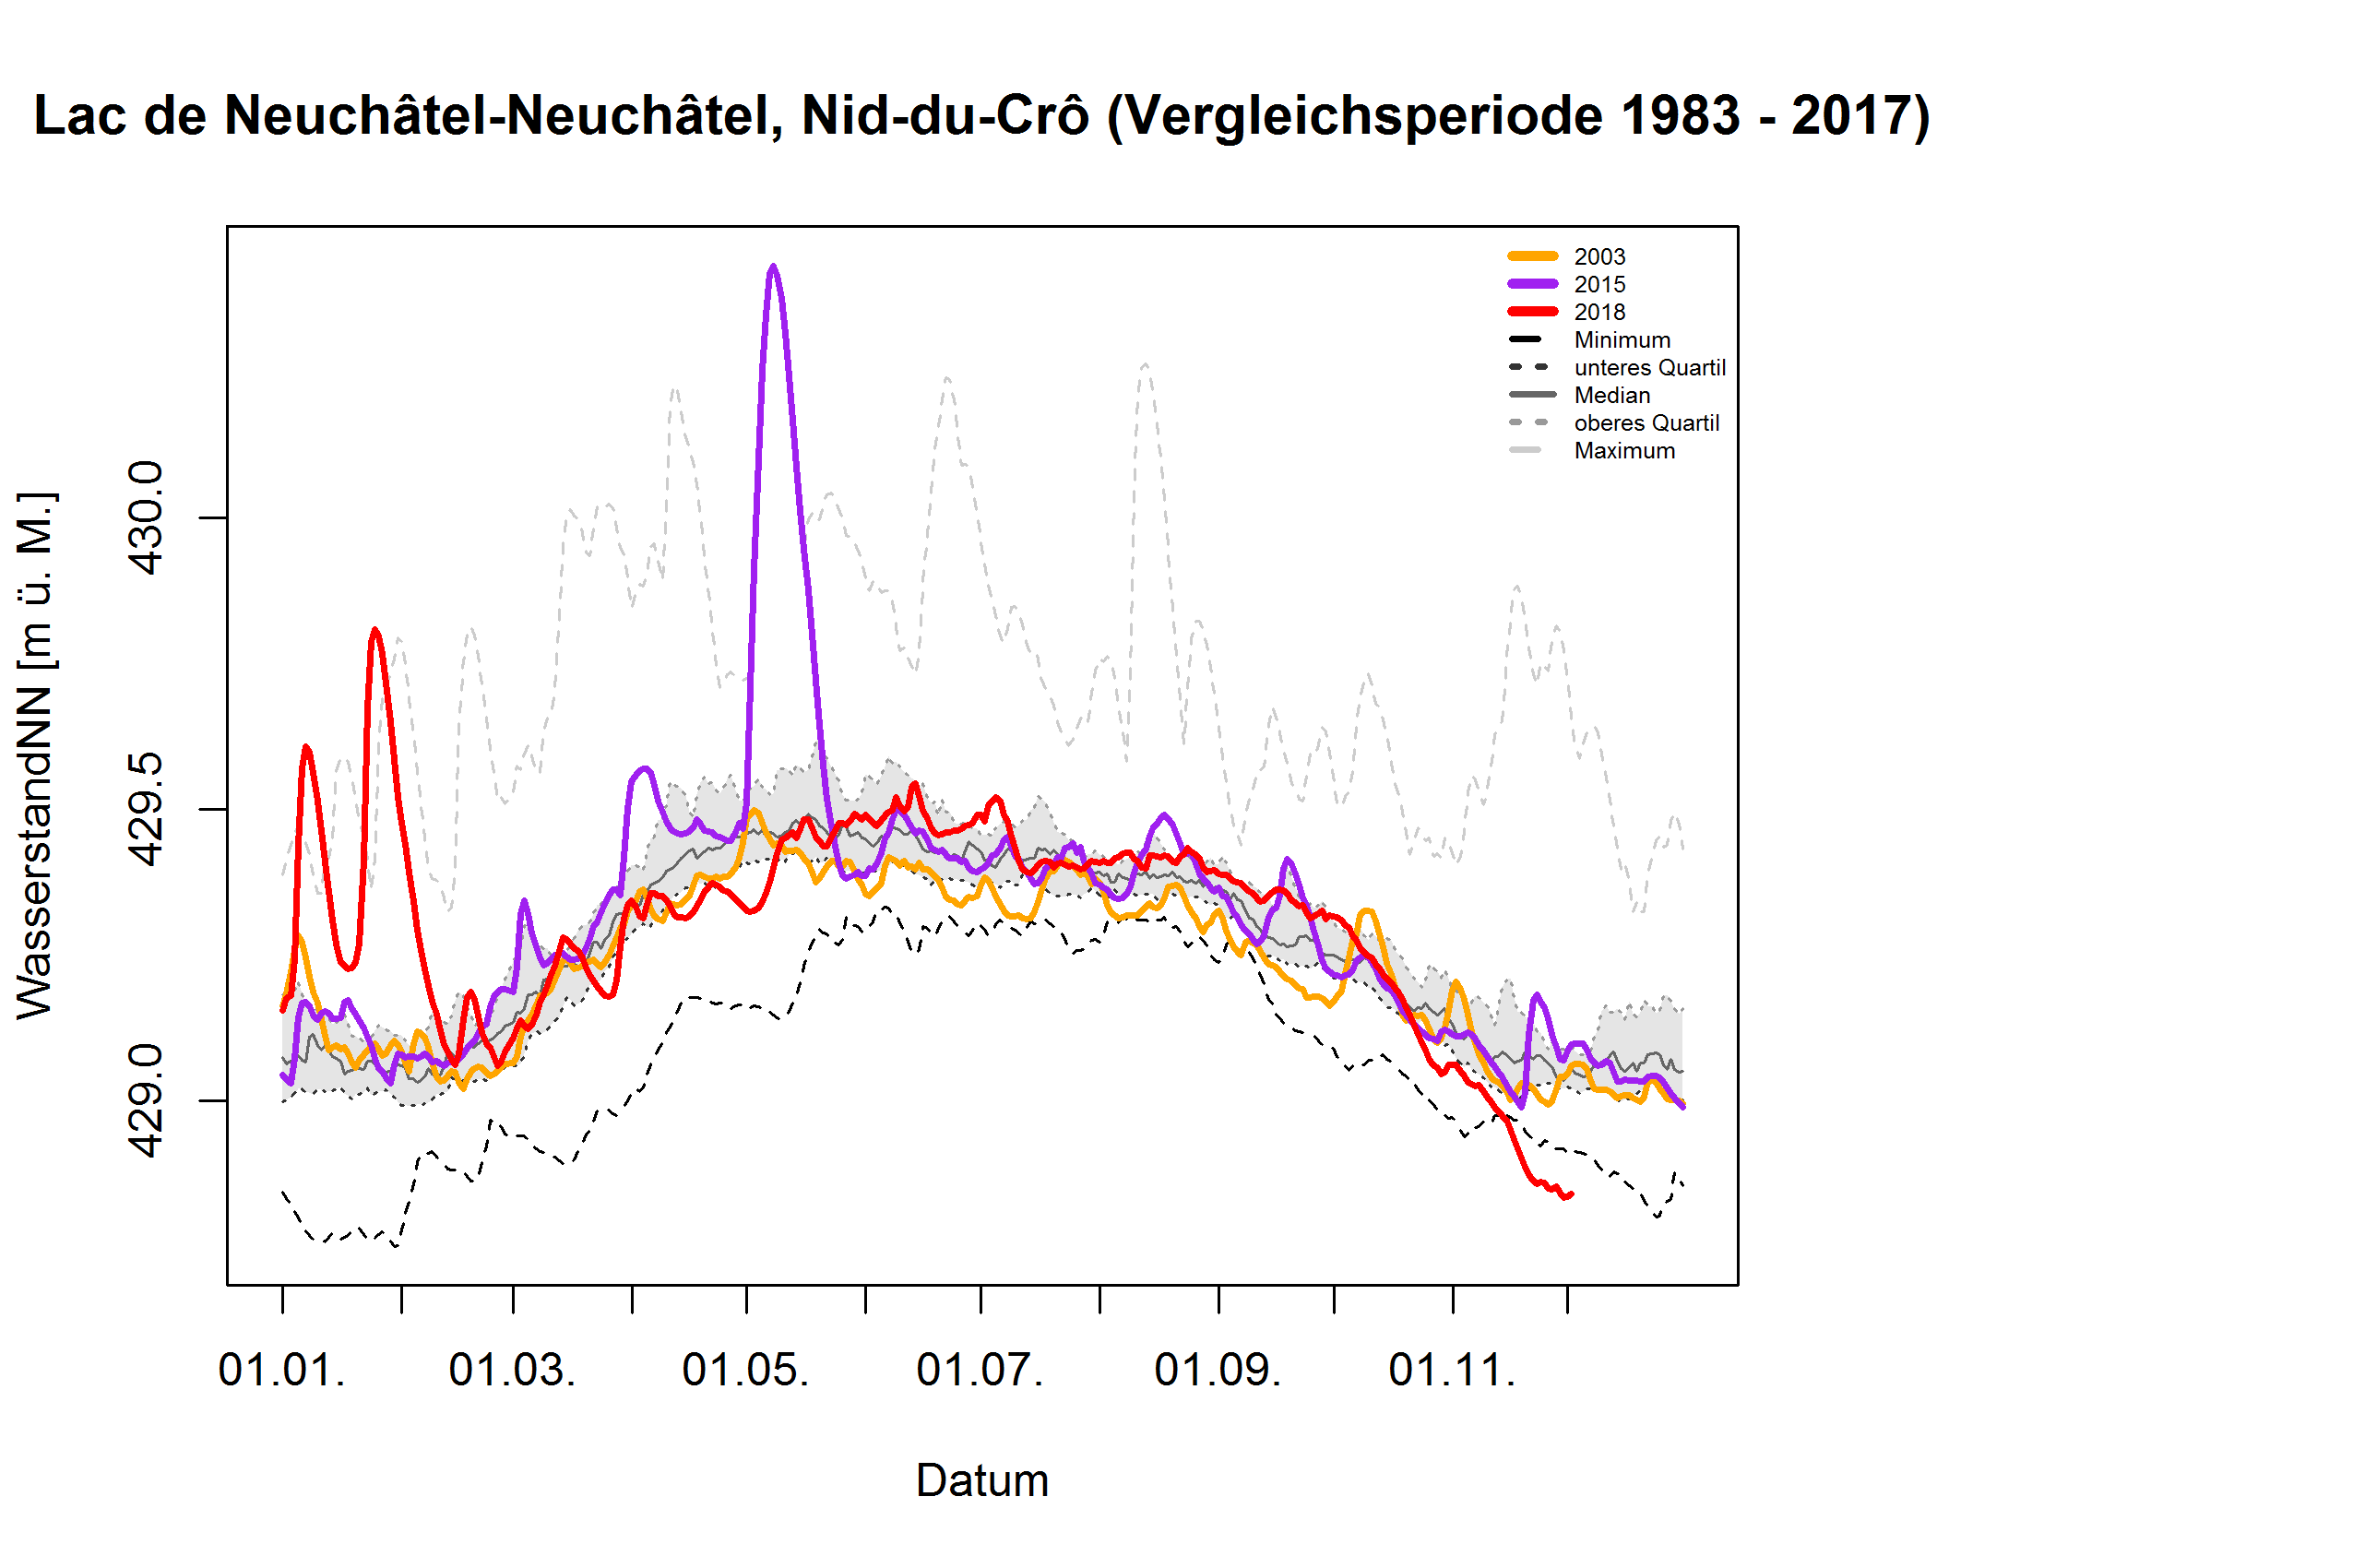 Lac de Neuchâtel, Nid-du-Crô: Vergleichsperiode 1983 - 2017